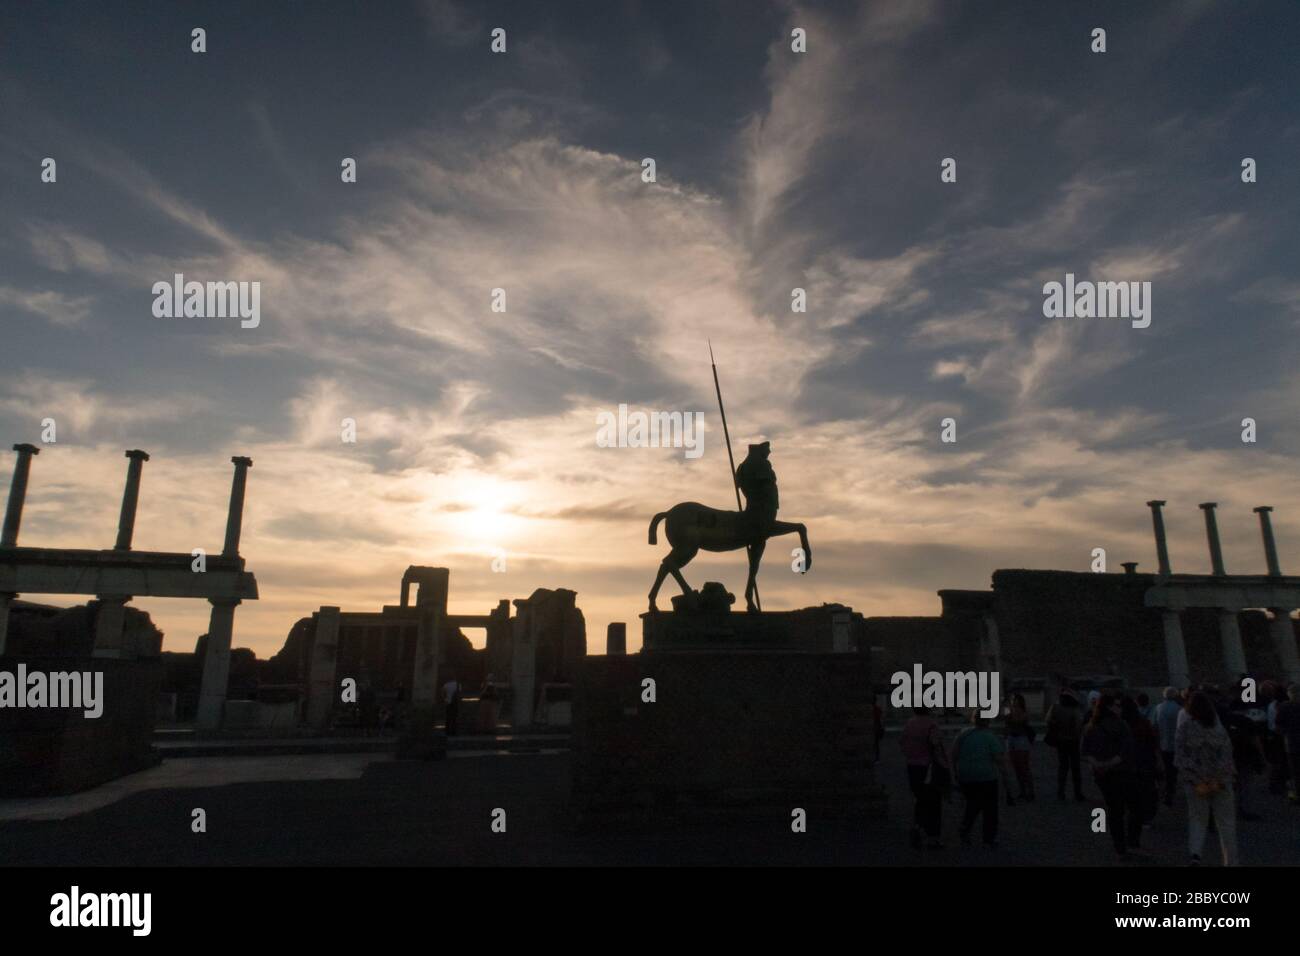 The statue of a centaur by Igor Mitoraj, in Pompeii, Naples, Italy Stock Photo